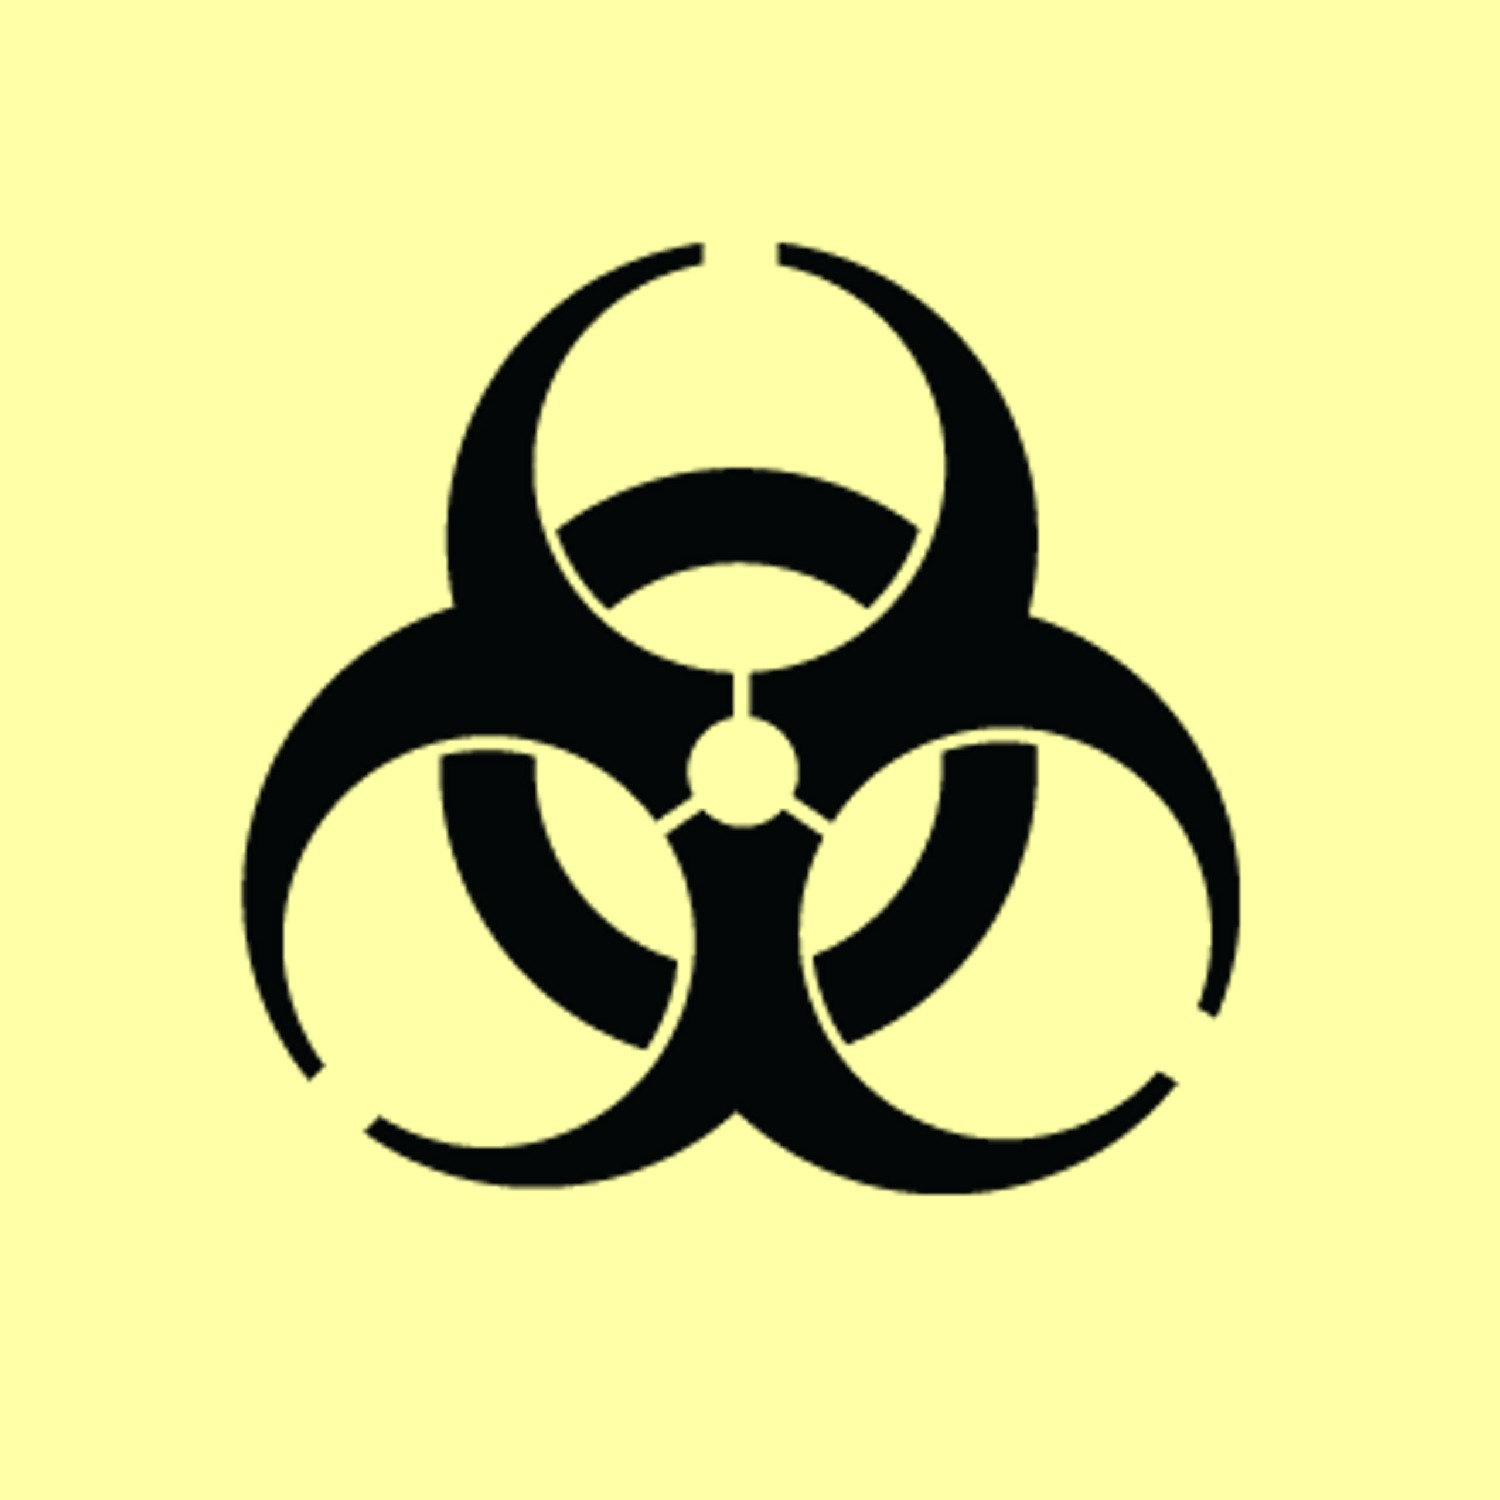 Popular items for biohazard symbol on Etsy